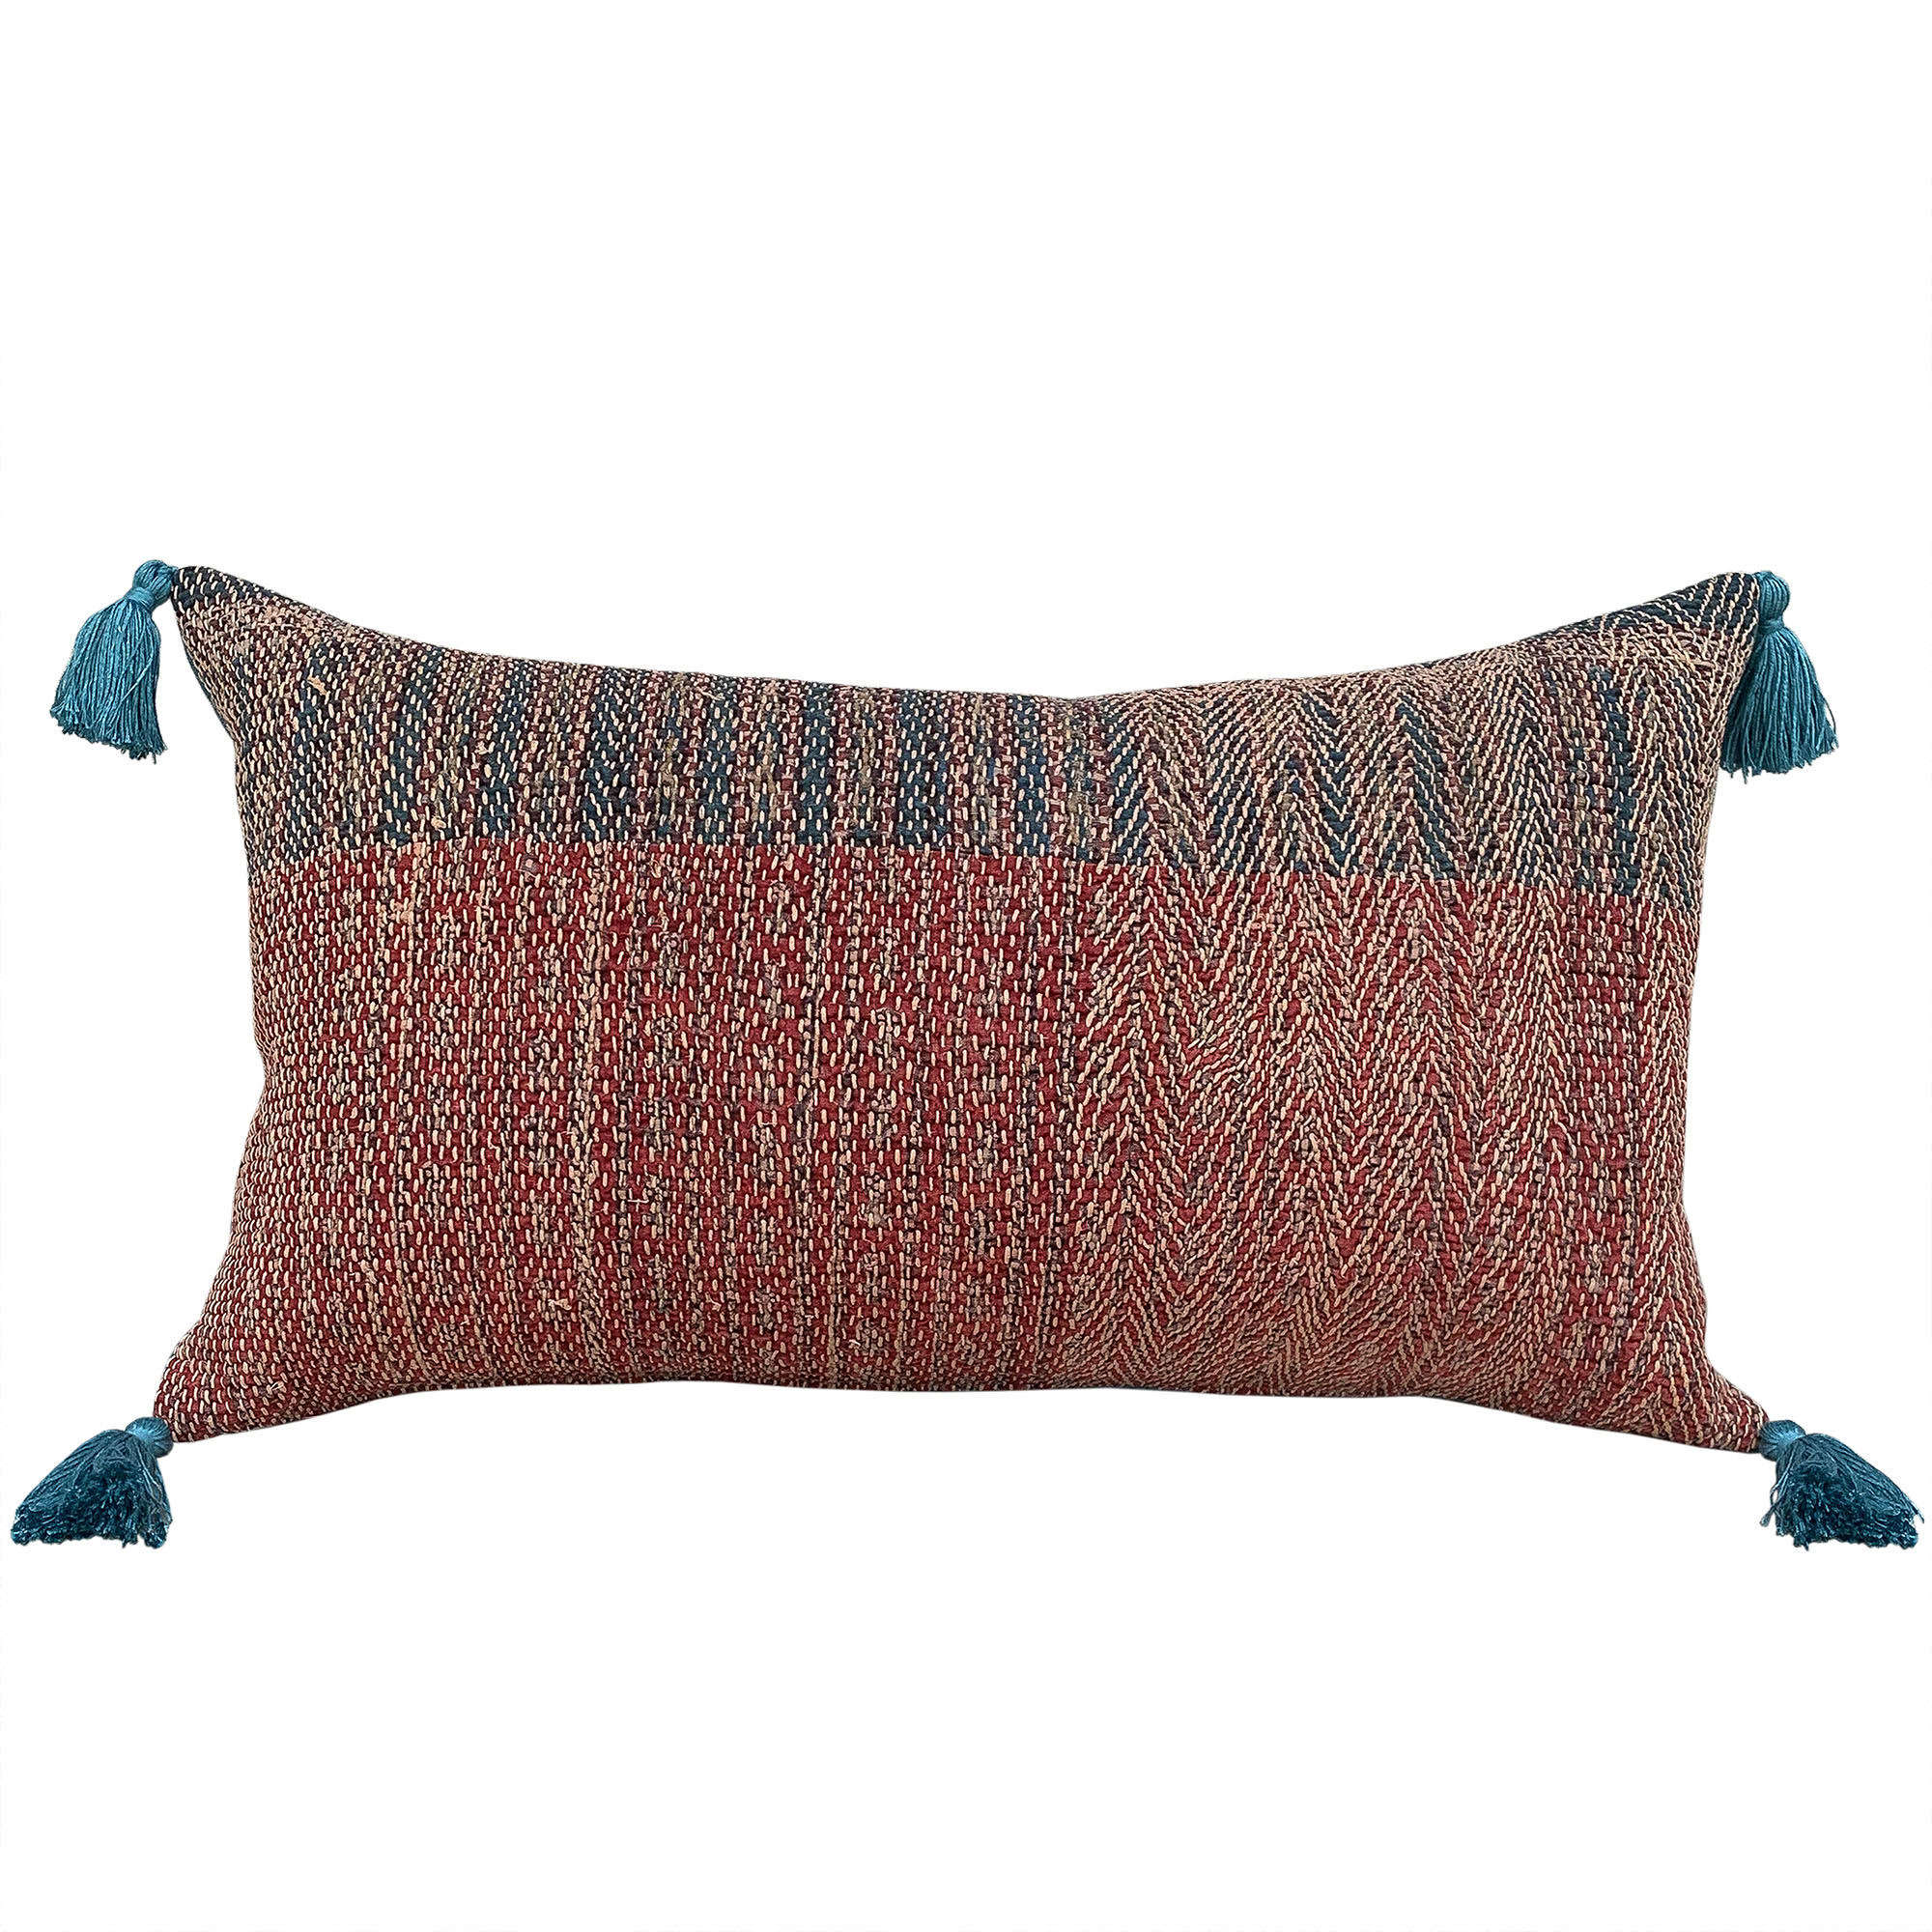 Banjara cushion with teal tassels